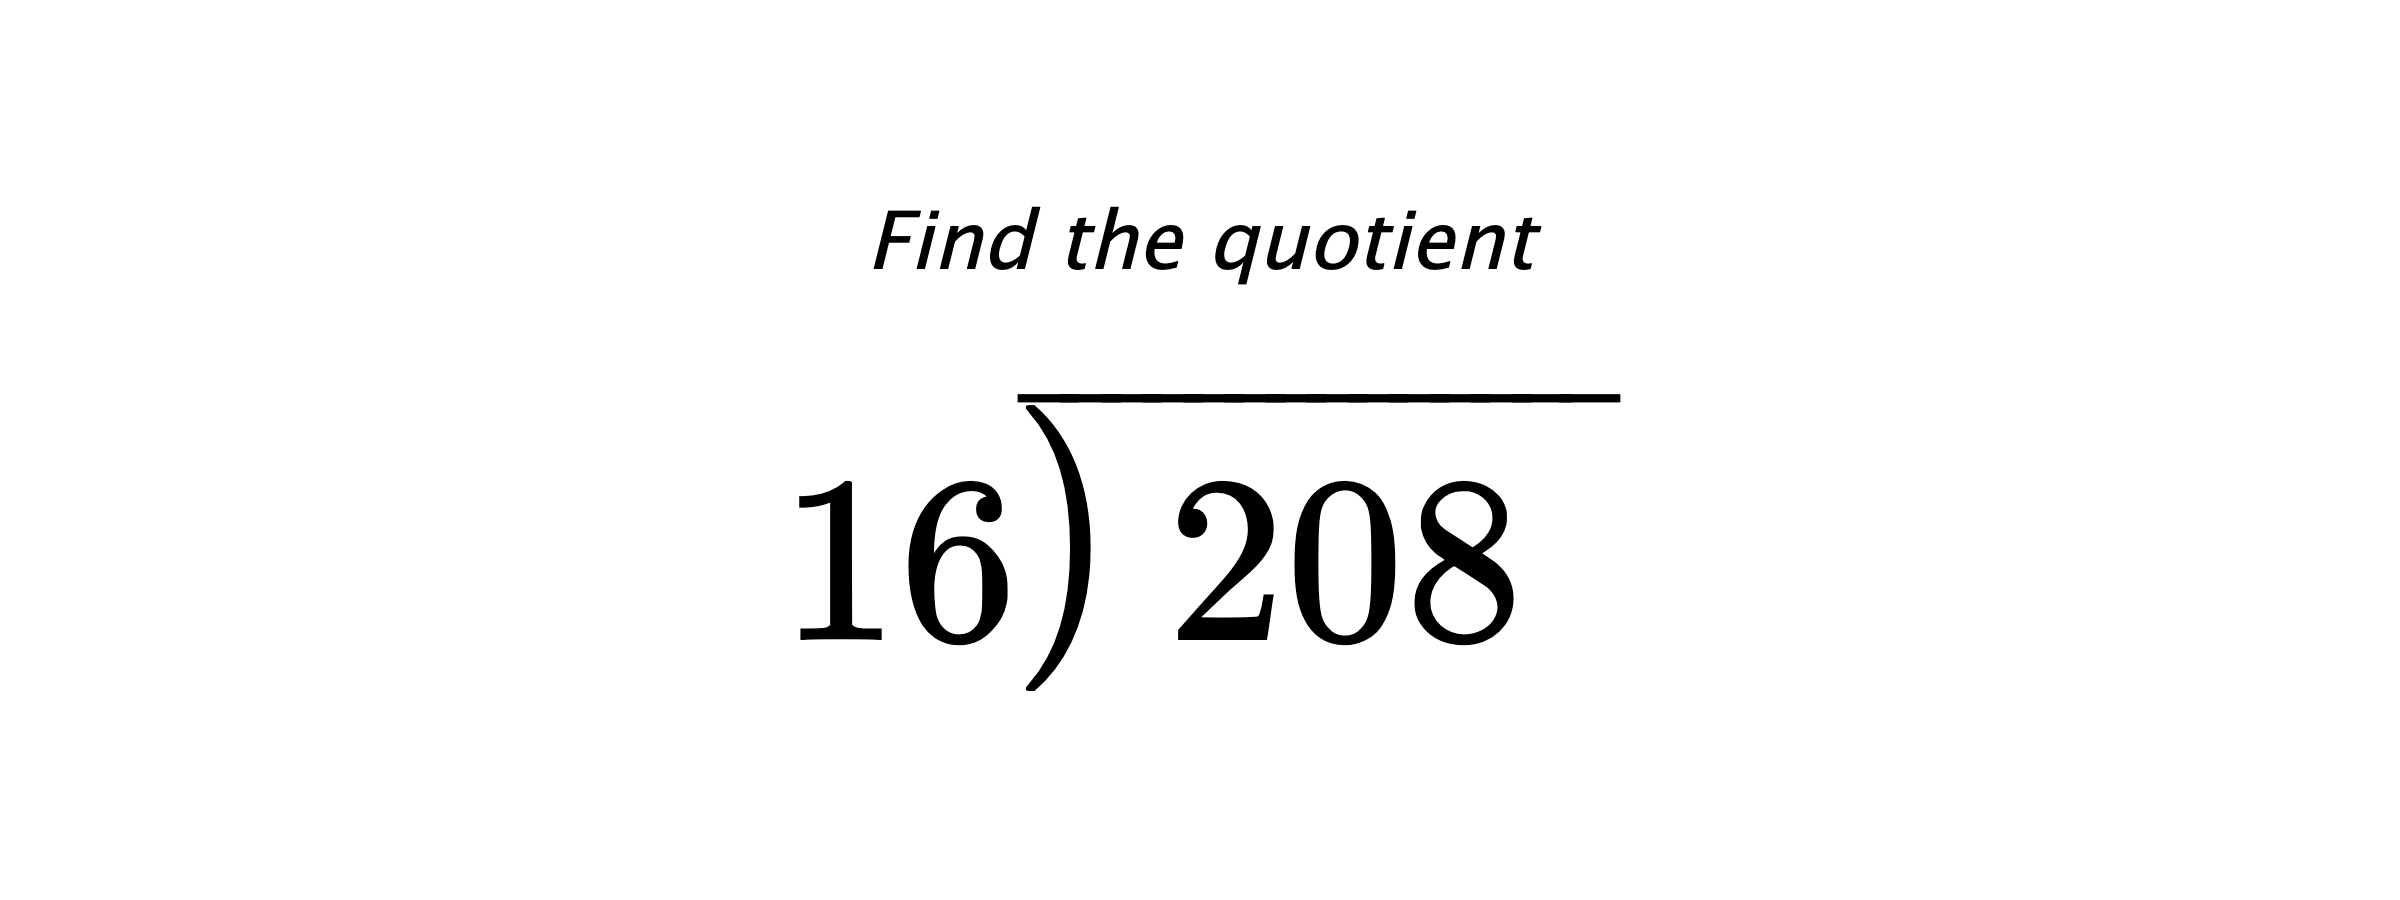 Find the quotient $ 16{\overline{\smash{\raise.3ex\hbox{$\big)$}}\,208\phantom{)}}} $